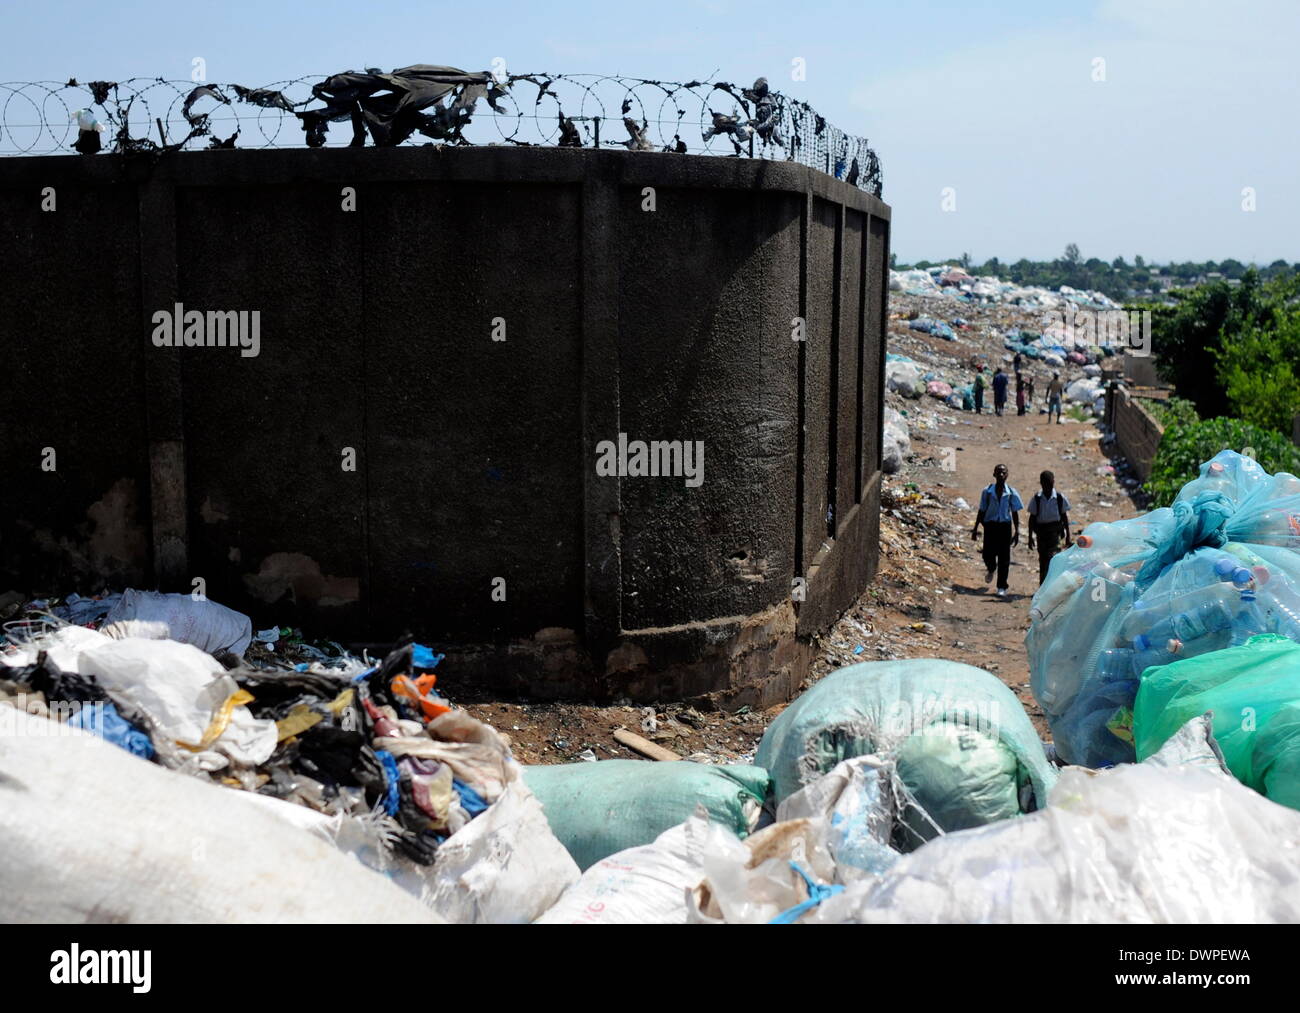 Maputo, Mozambique. 04 Mar, 2013. Bolsas de basura se apilan en frente de un vertedero de residuos en Maputo, Mozambique, 04 de marzo de 2013. Foto: Britta Pedersen -no hay servicio de cable-/dpa/Alamy Live News Foto de stock